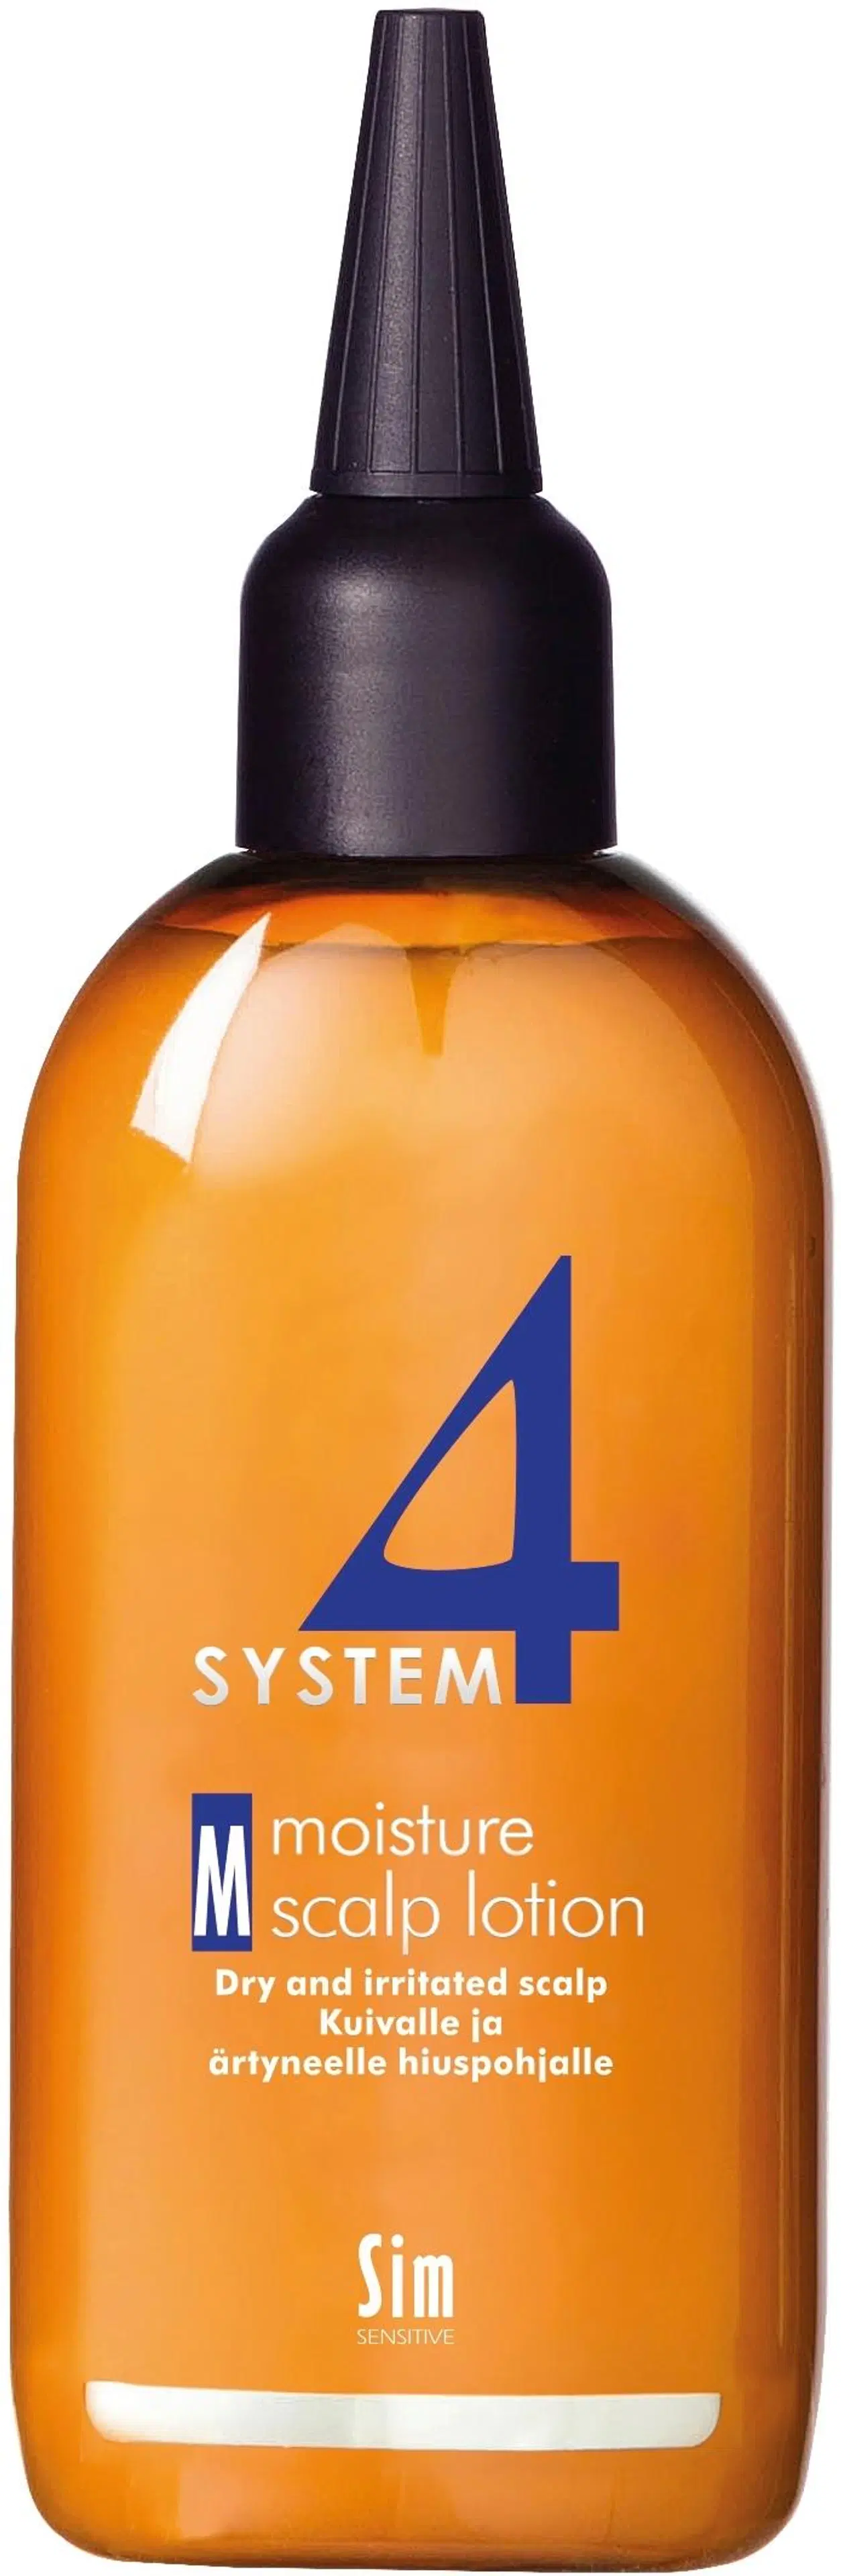 System4 M Moisture Scalp Lotion hiuspohjanhoito 100 ml